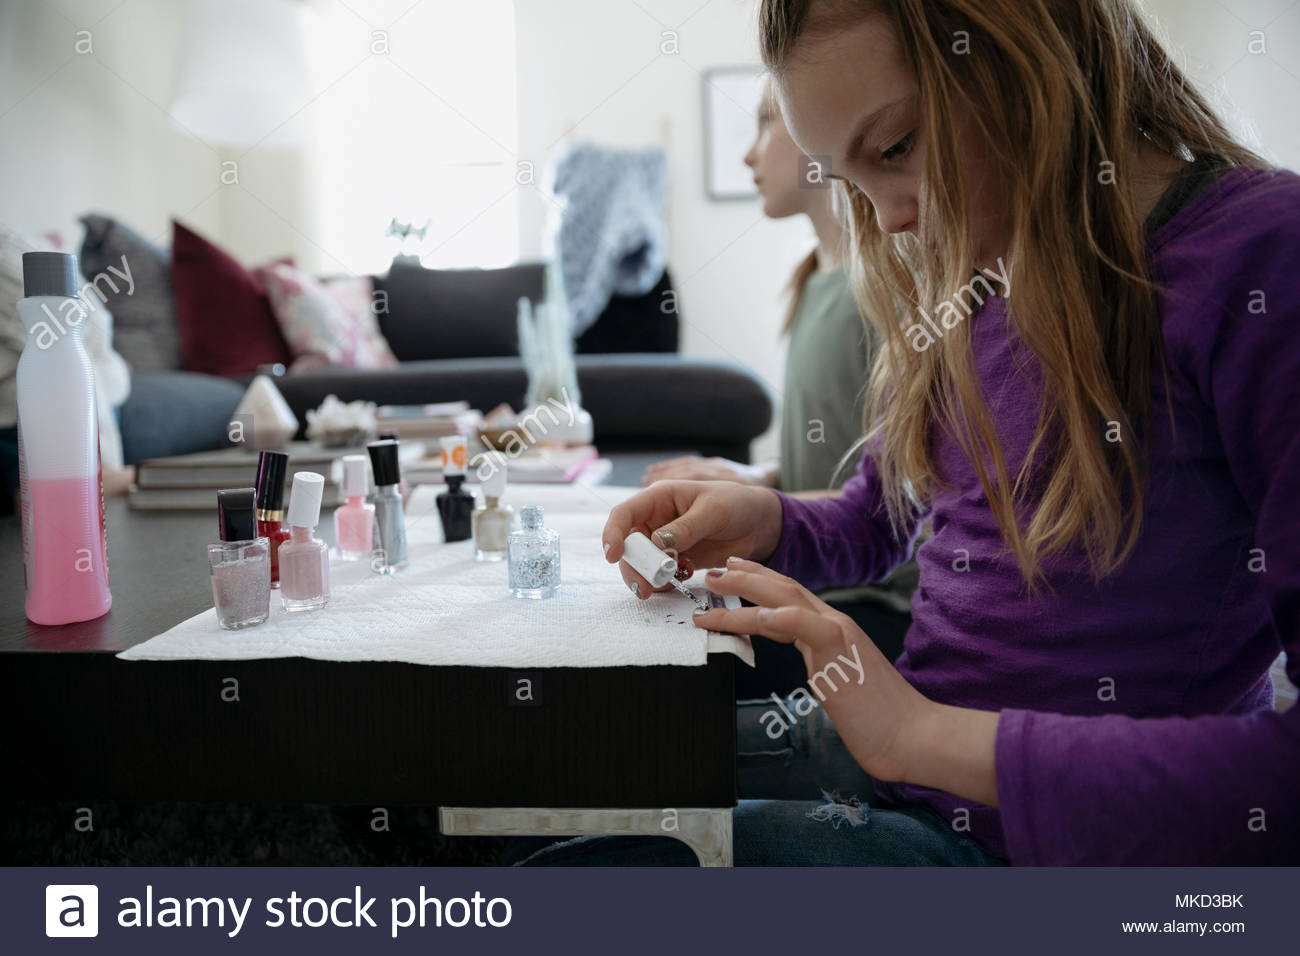 Focused girl painting fingernails with fingernail polish in living room Stock Photo